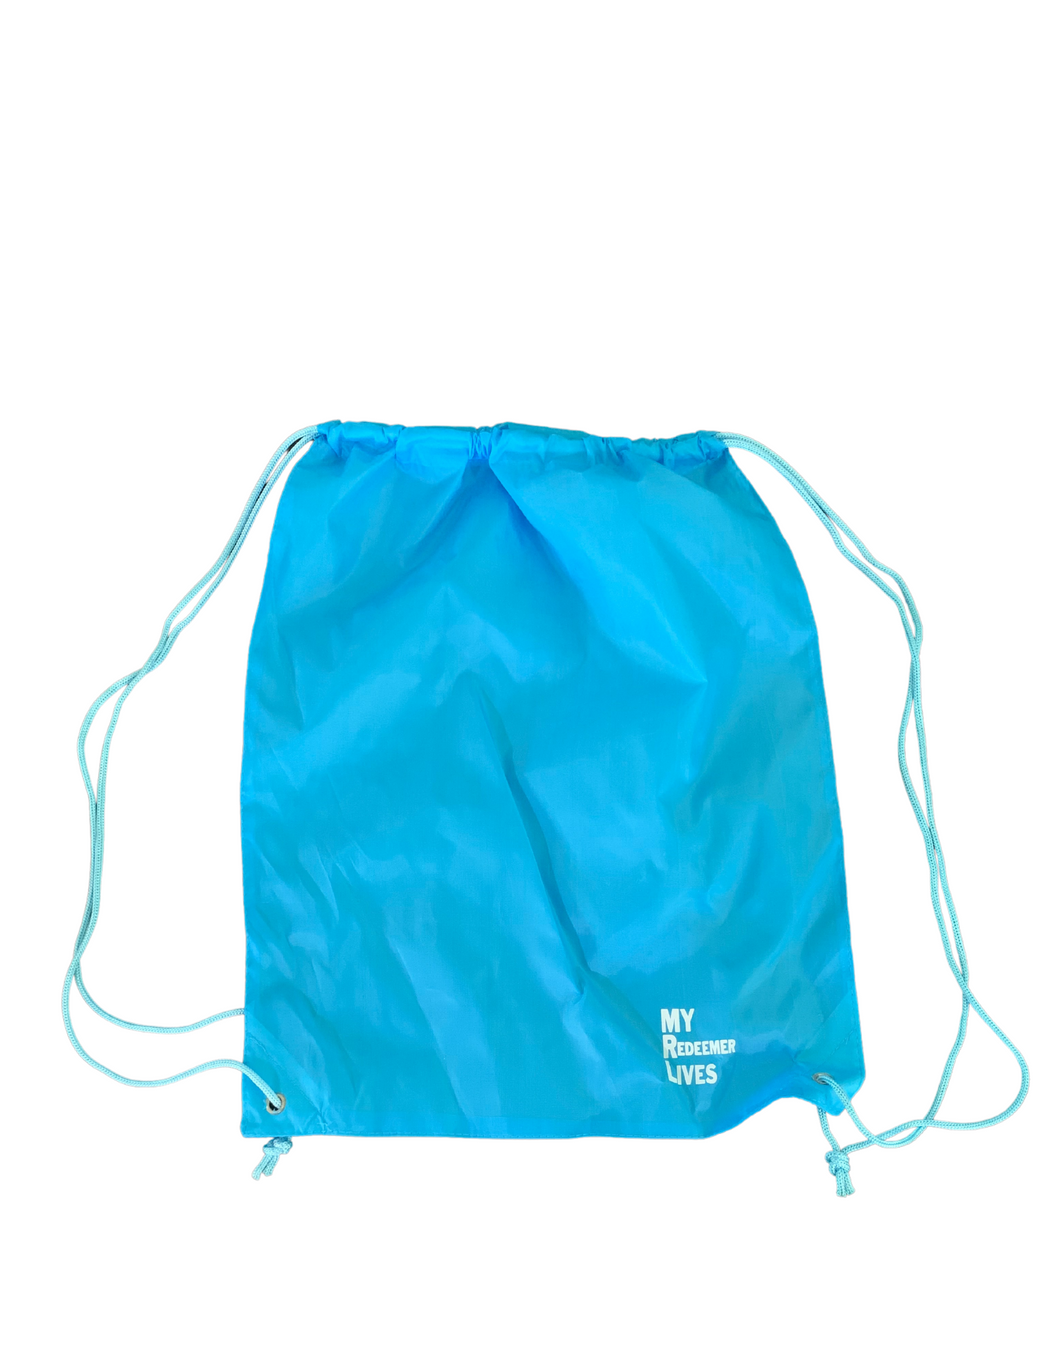 MRL Blue Drawstring Backpack (My Redeemer Lives)